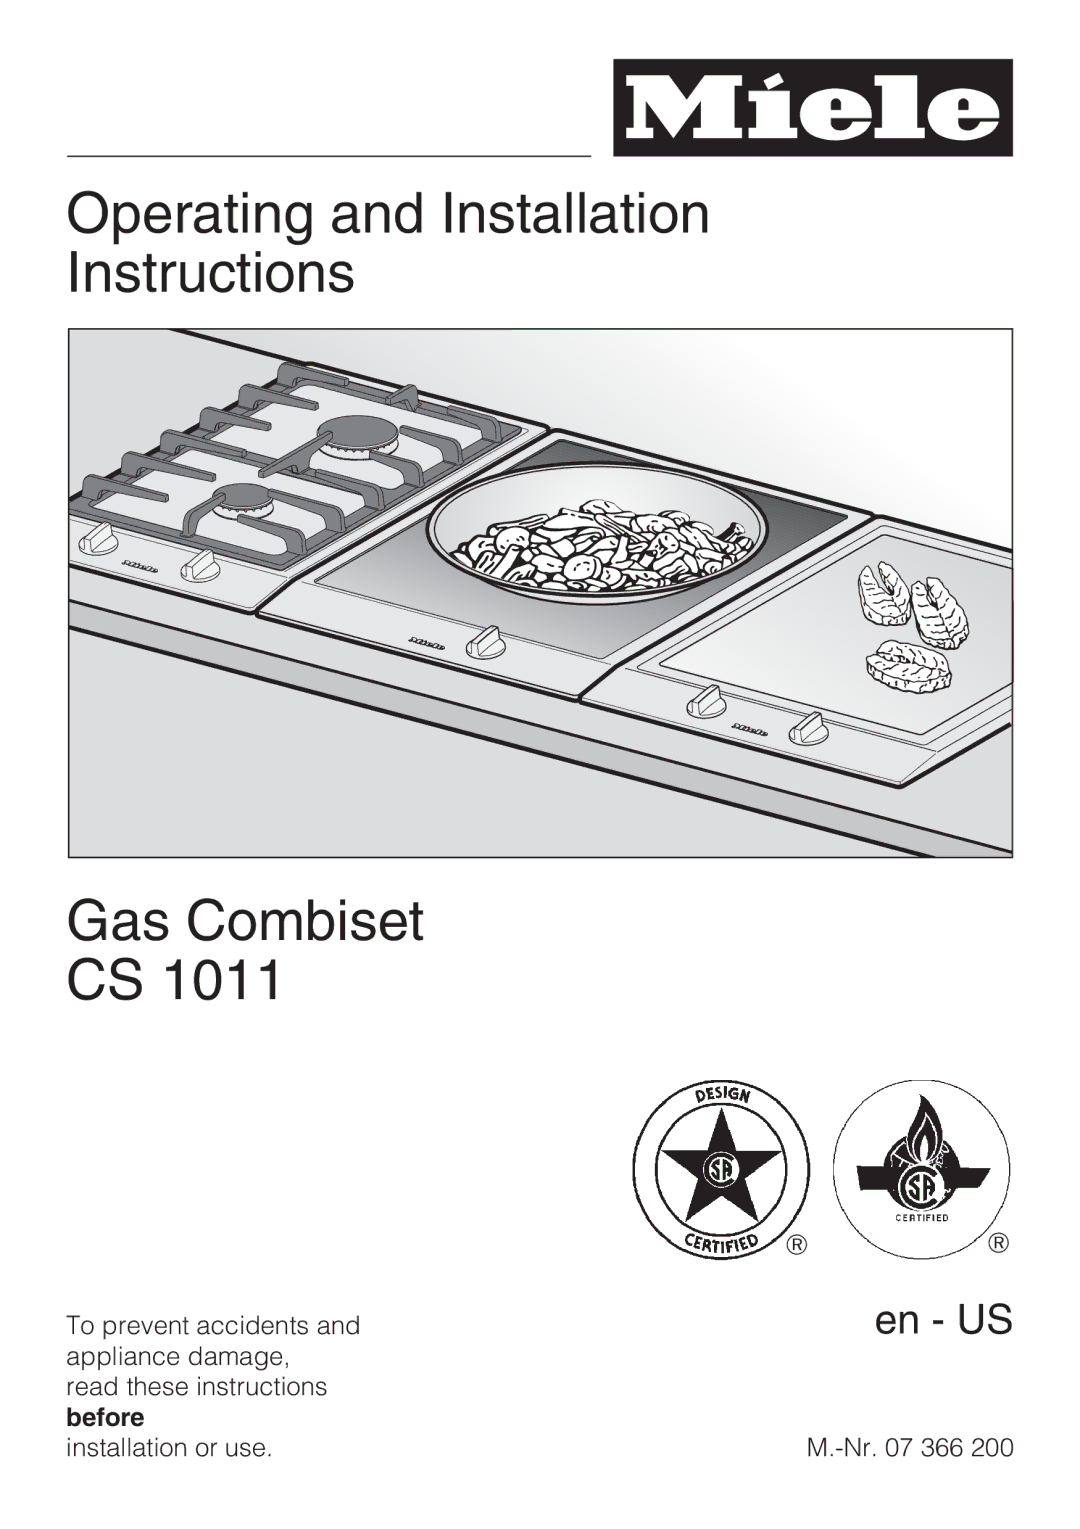 Miele CS 1011 installation instructions Operating and Installation Instructions Gas Combiset 